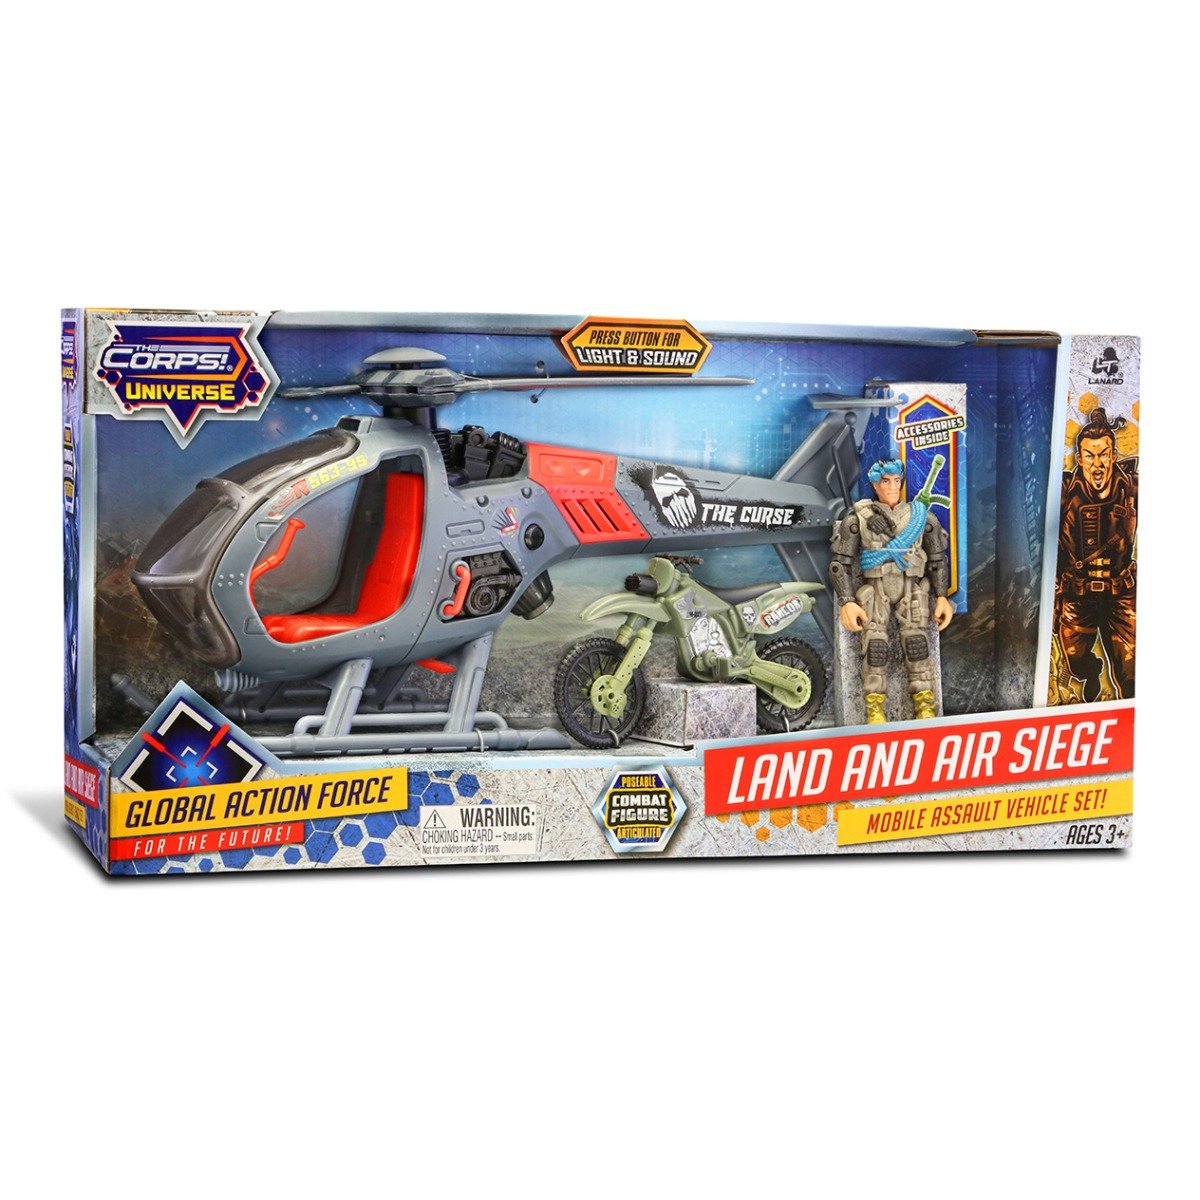 Poze Set elicopter, motocicleta si figurina, The Corps Universe, Lanard Toys